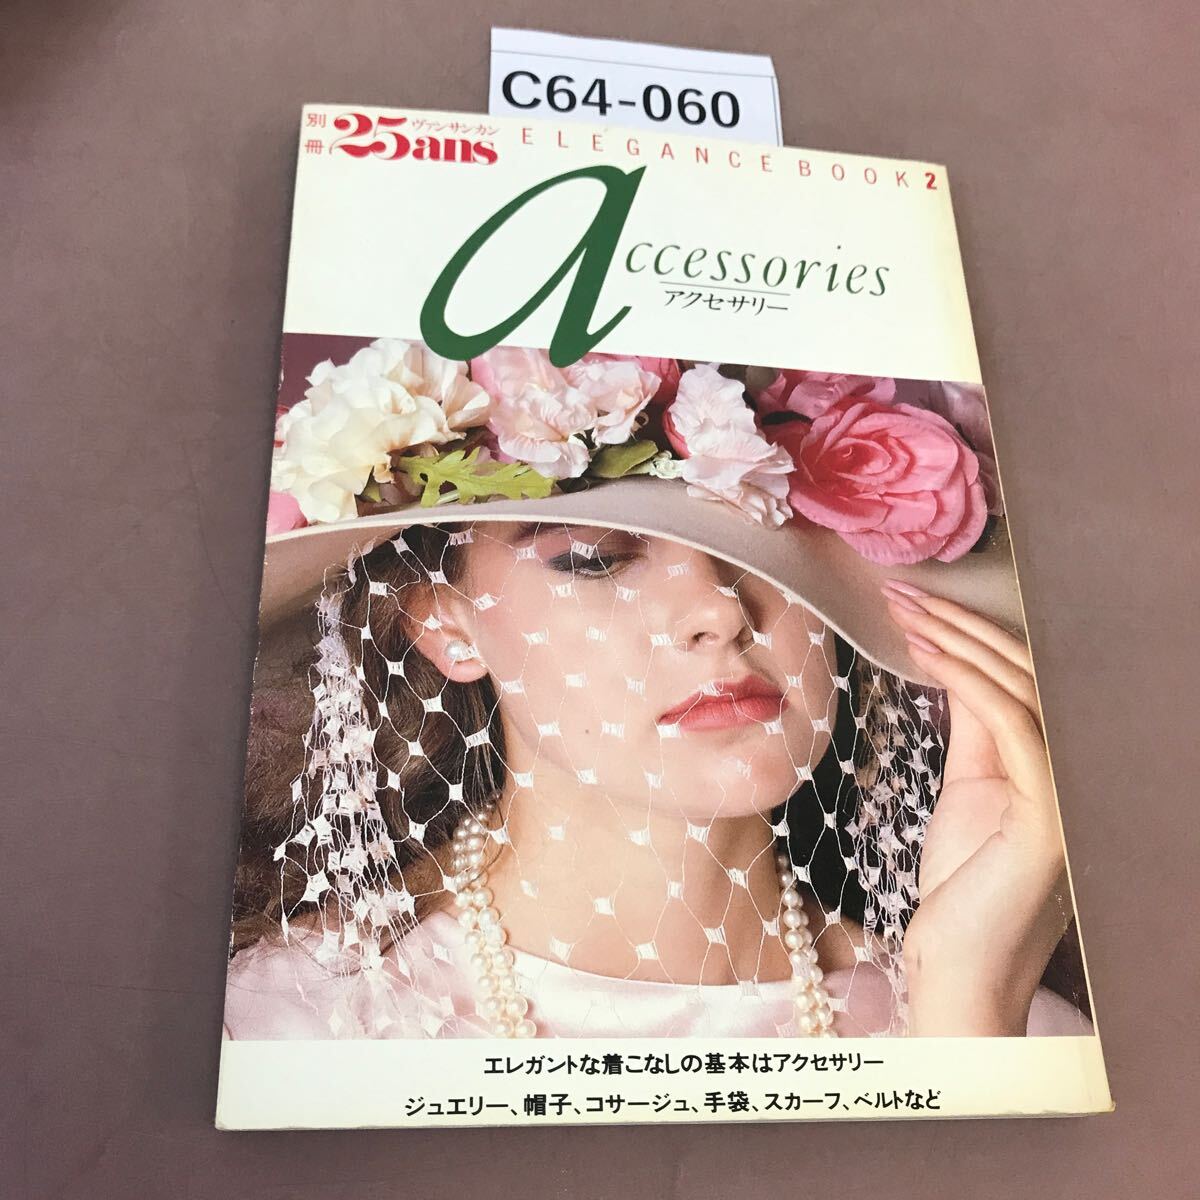 C64-060 別冊25ans Elegance Book 2 アクセサリー 婦人画報社_画像1